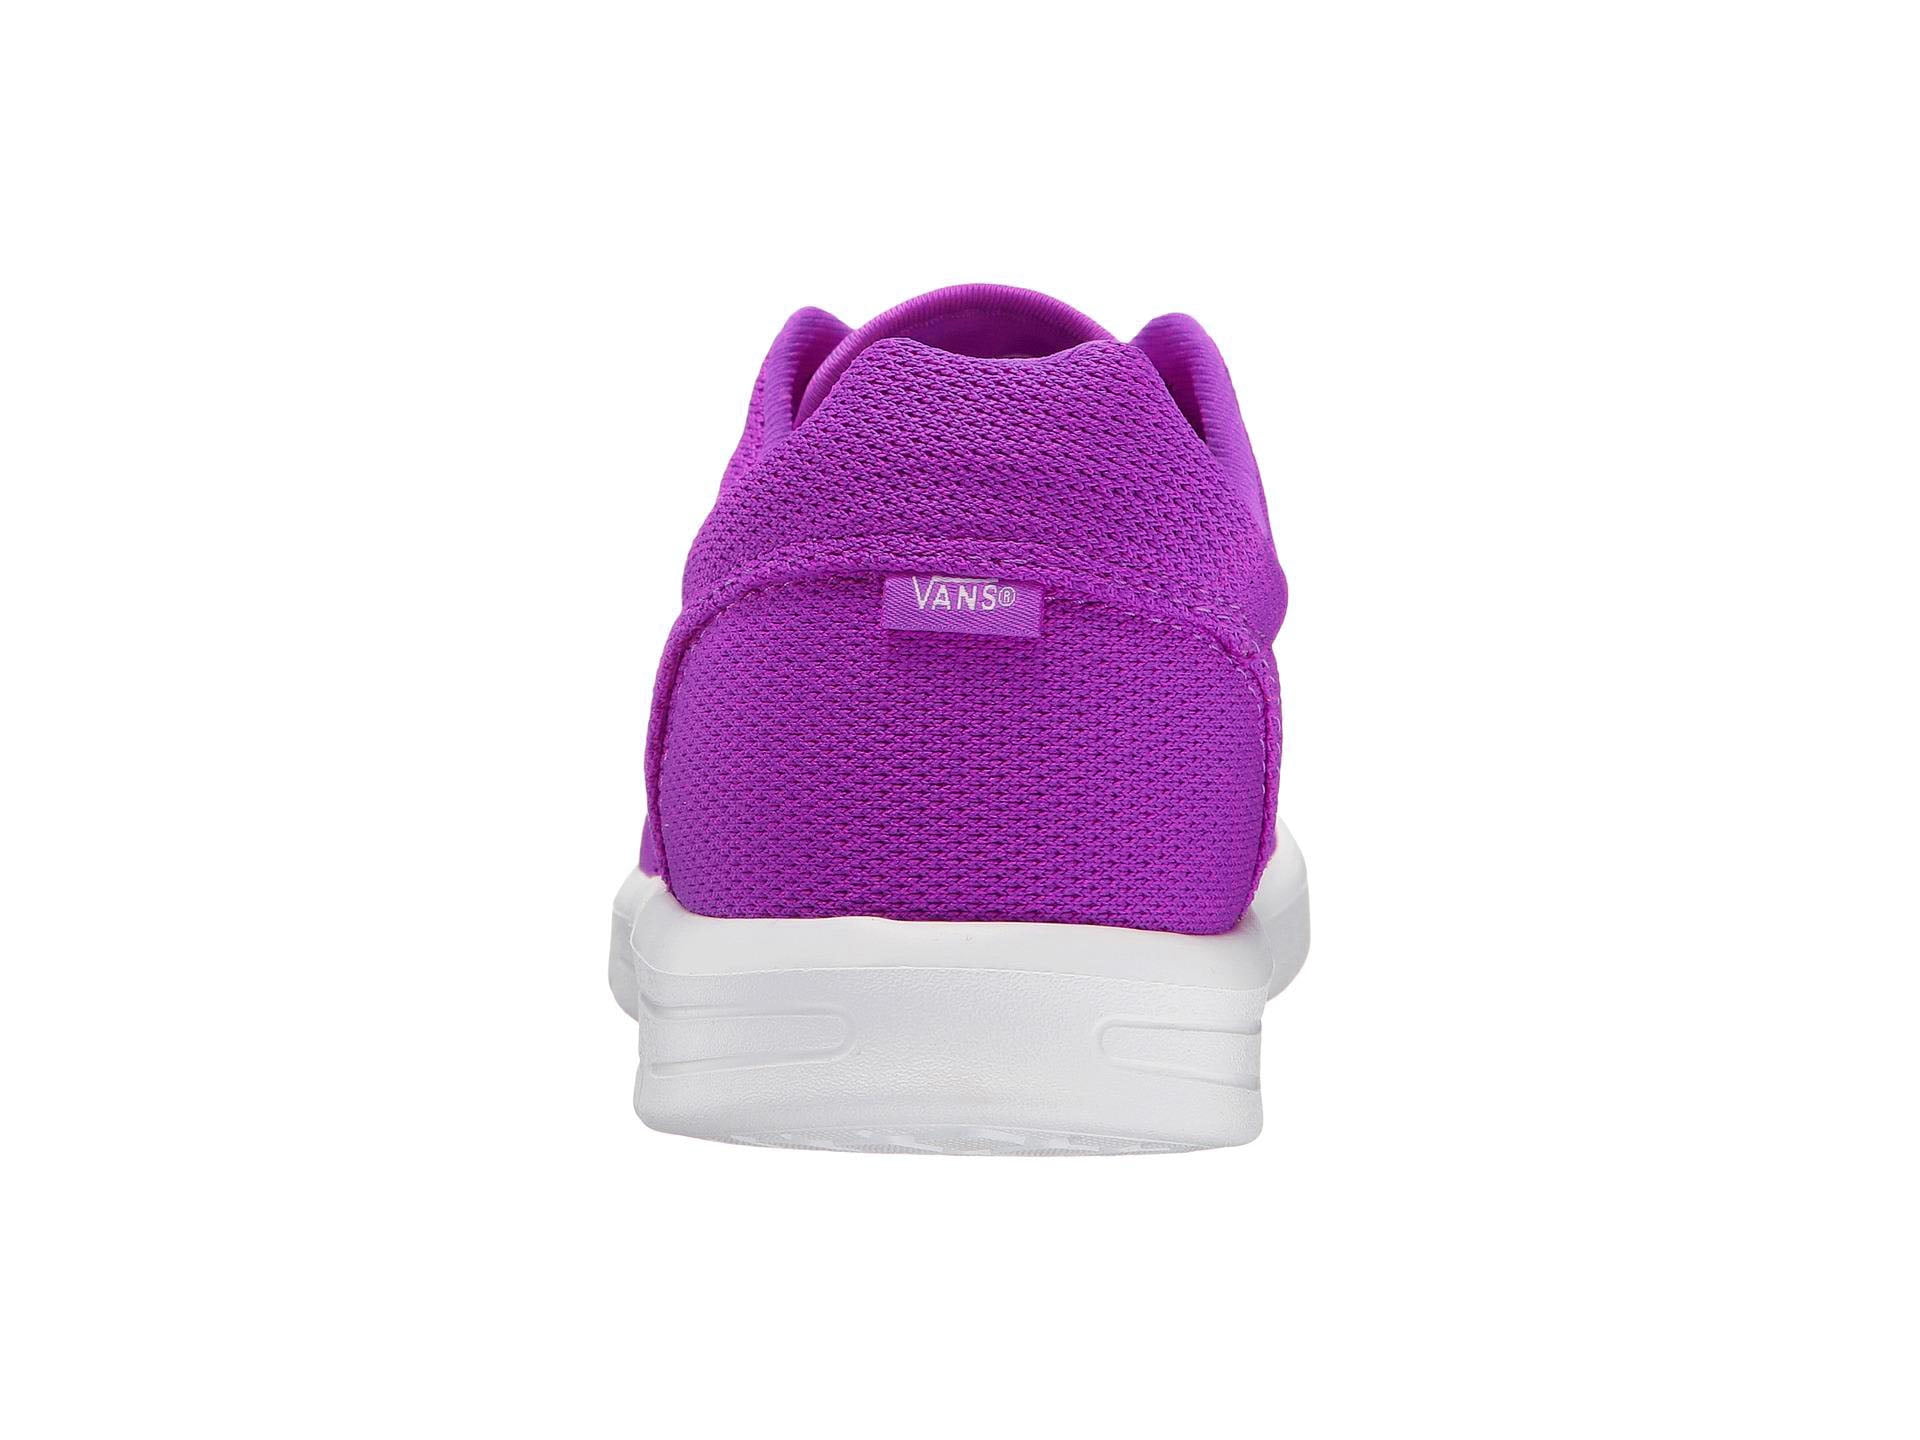 vans unisex iso mesh running shoes (5.5 m us / 4 m us neon purple) - Walmart.com